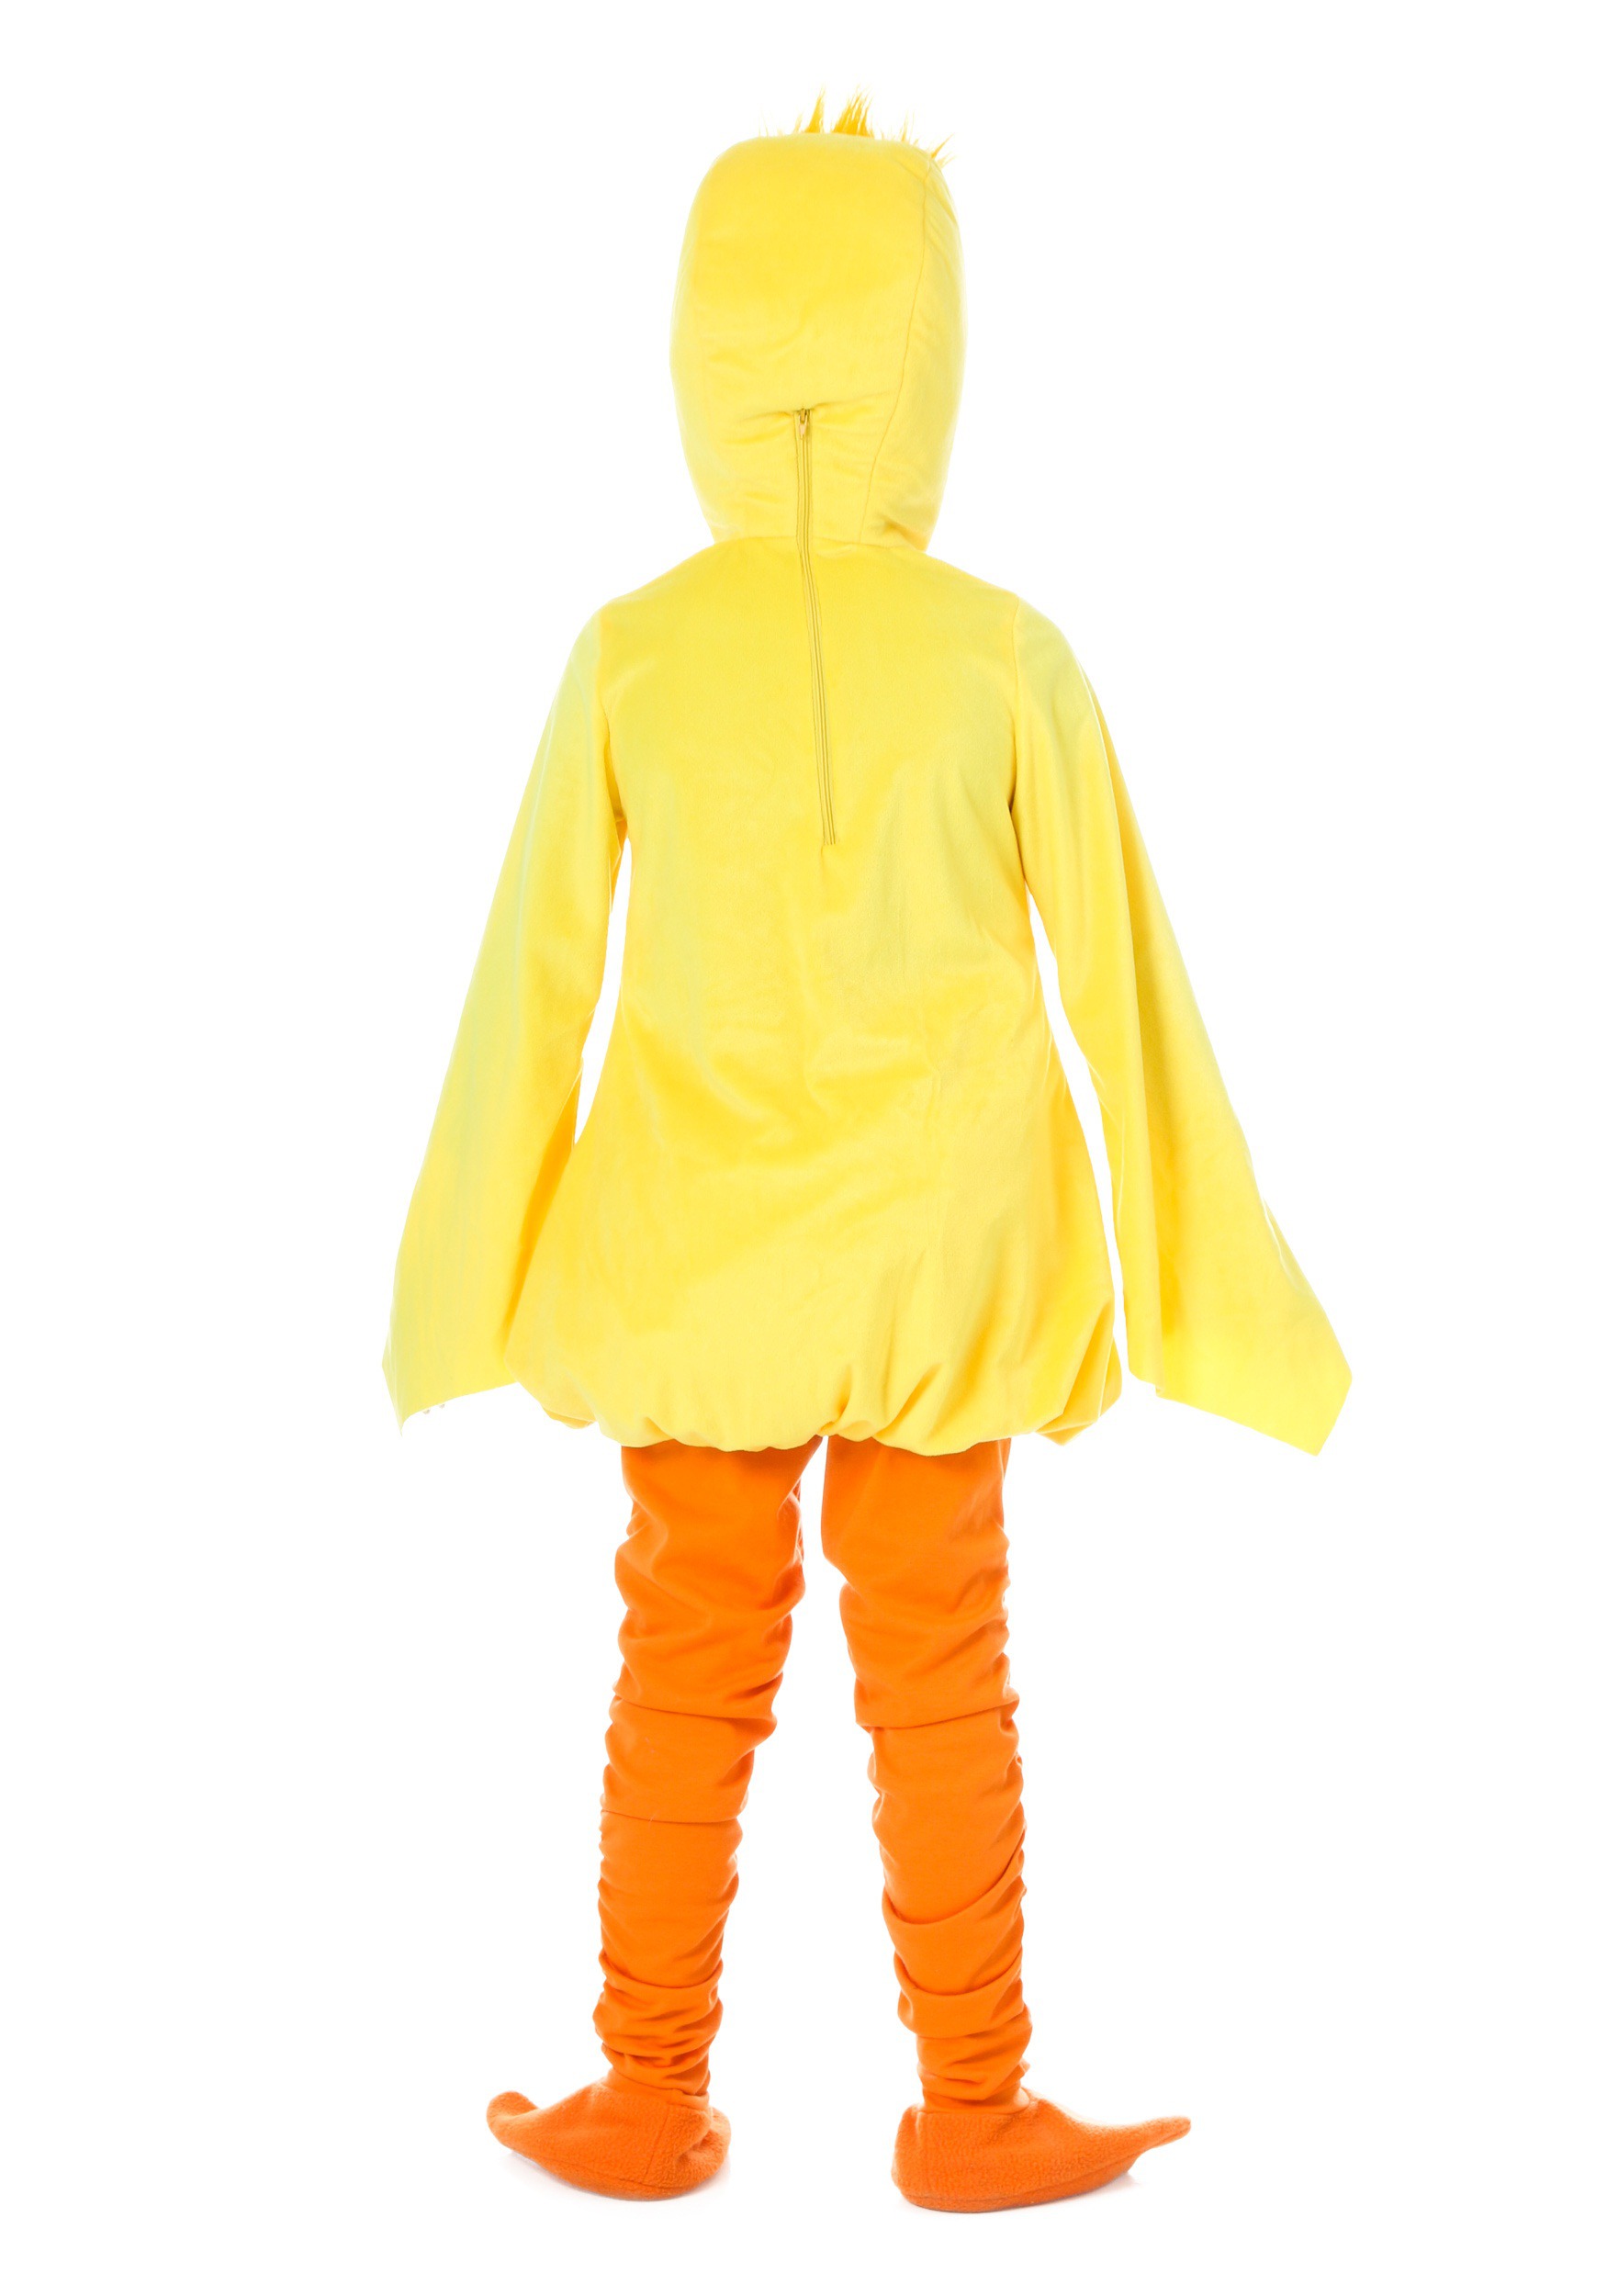 Duck costume child